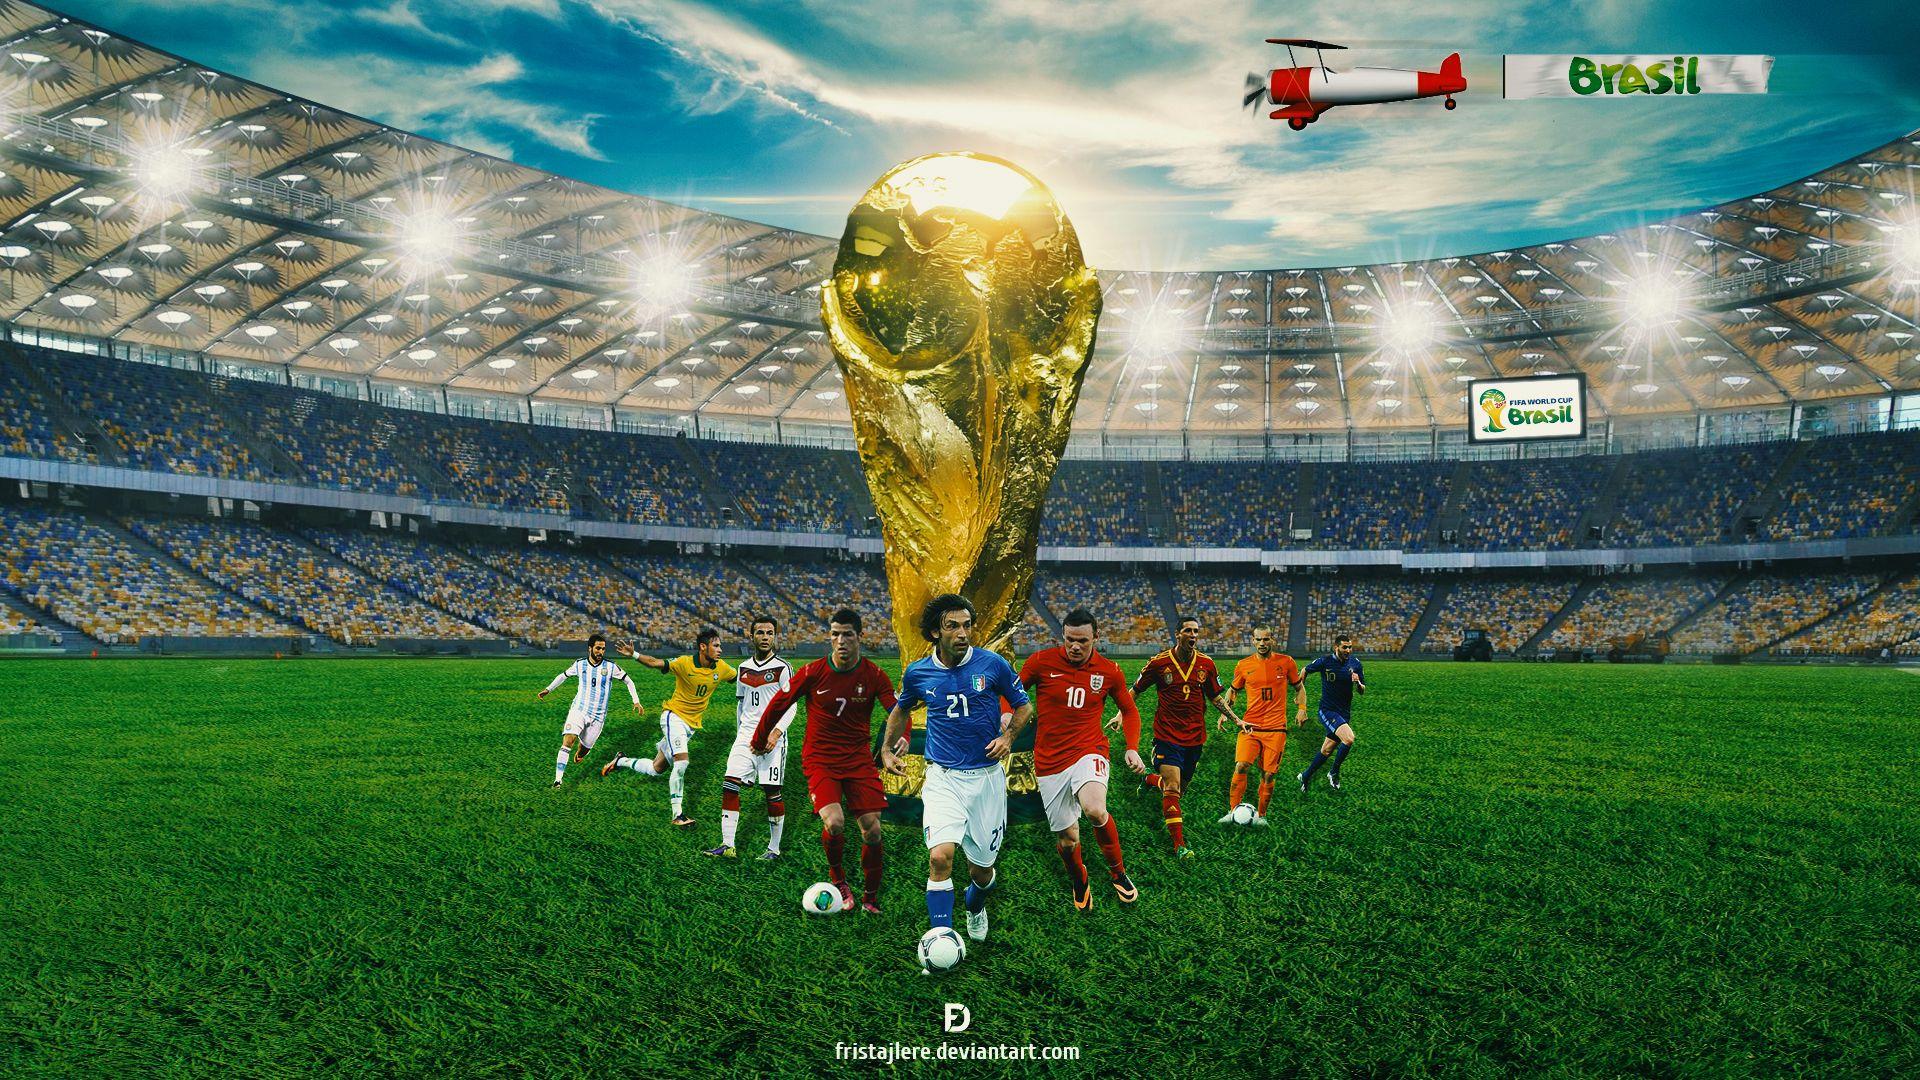 Fifa World Cup Desktop Wallpapers Wallpaper Cave